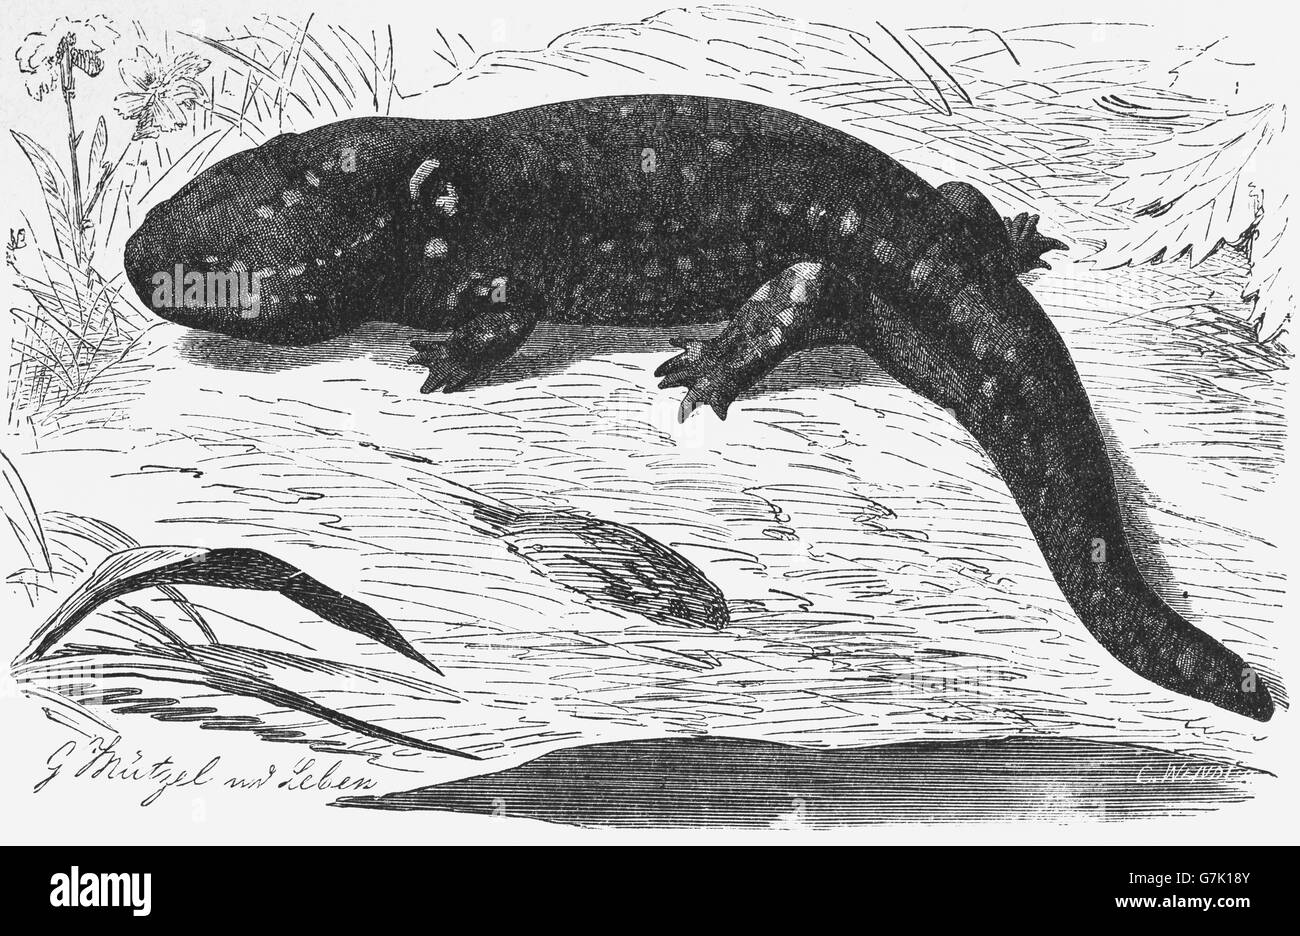 Tiger salamander, eastern tiger salamander, Ambystoma tigrinum, amphibian, illustration from book dated 1904 Stock Photo